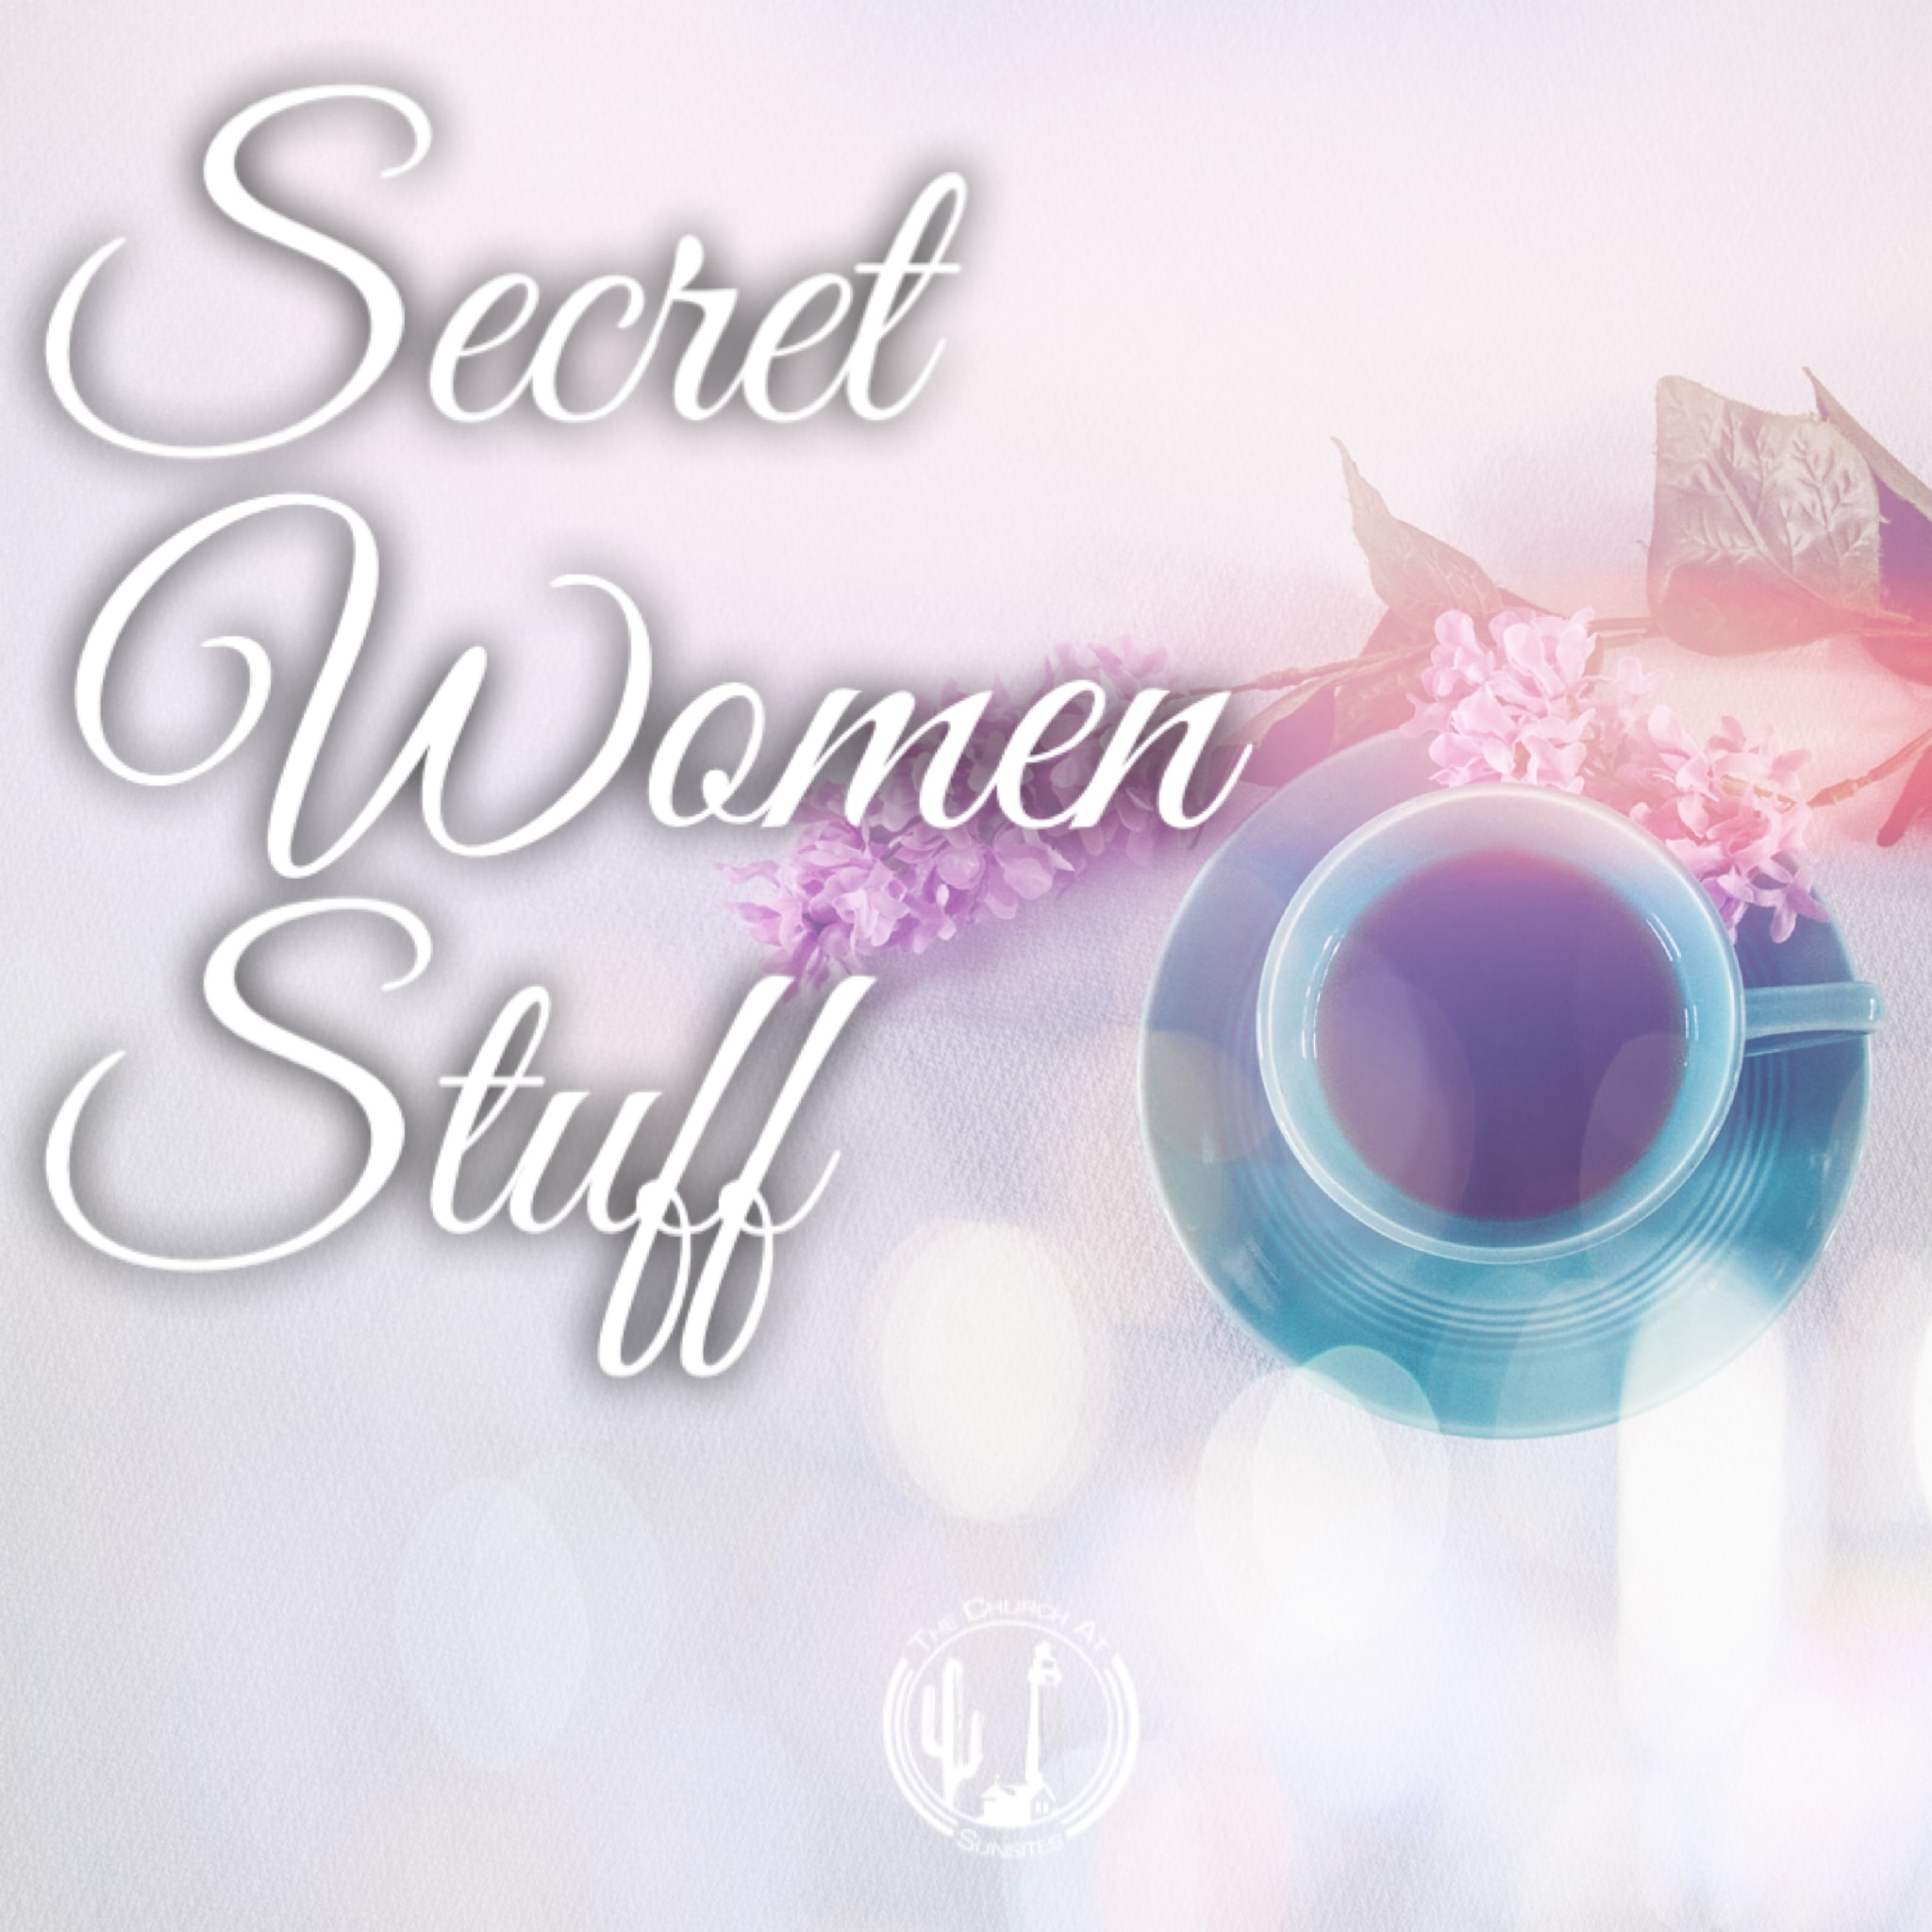 Secret Women Stuff: Pilot, Godly Marriage